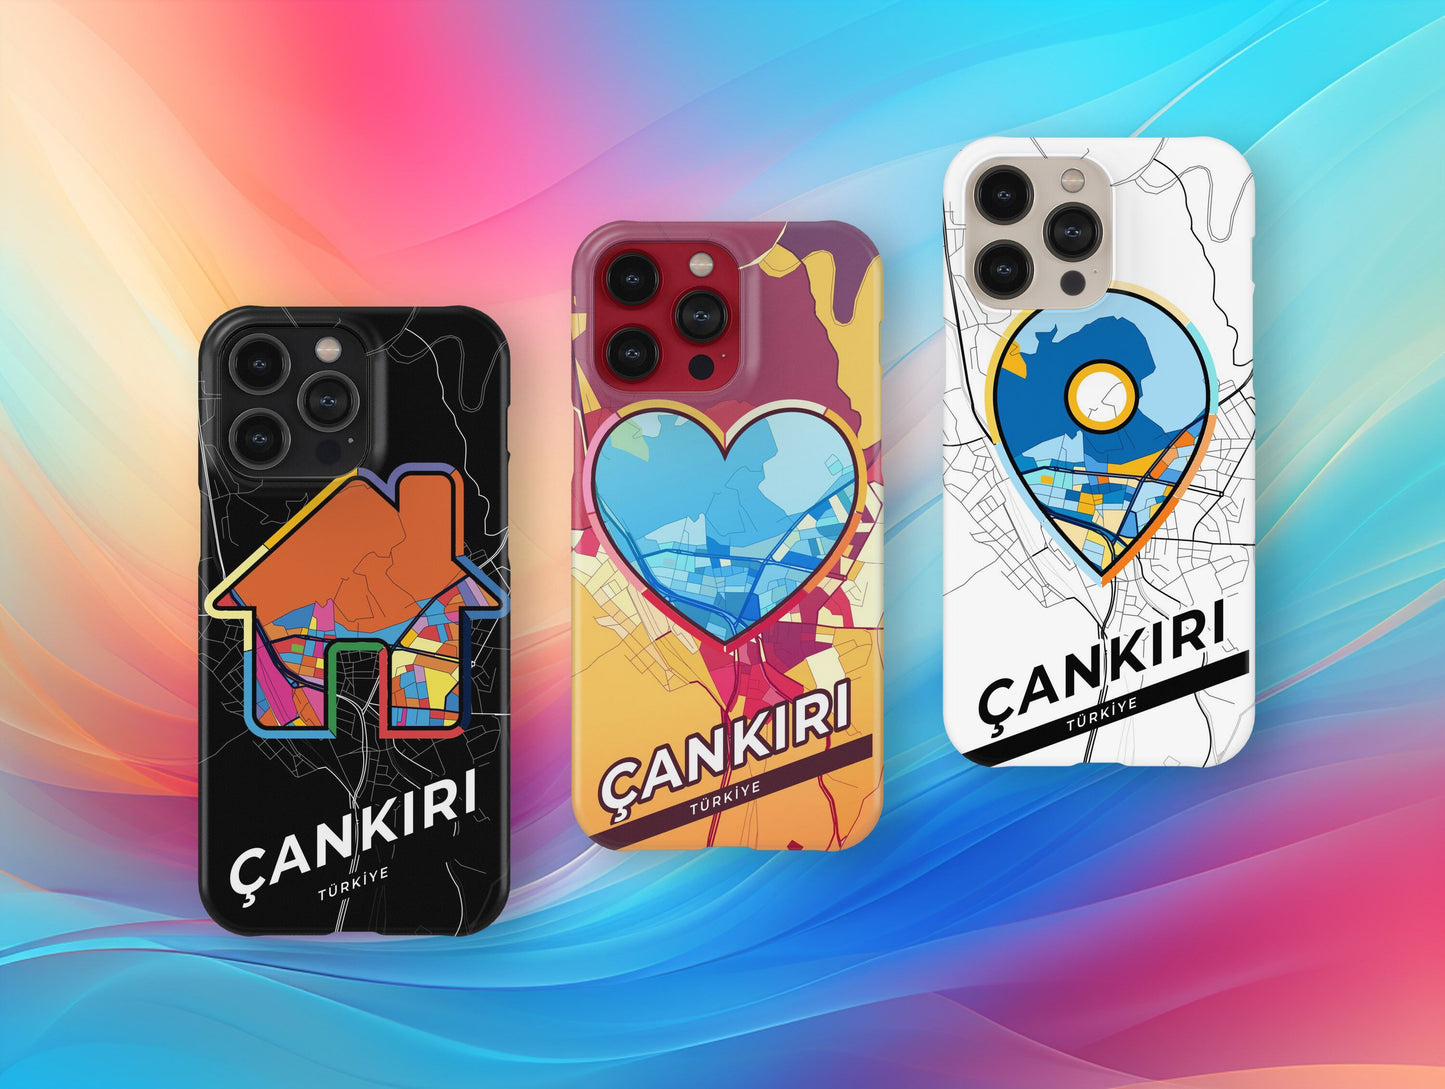 Çankırı Turkey slim phone case with colorful icon. Birthday, wedding or housewarming gift. Couple match cases.